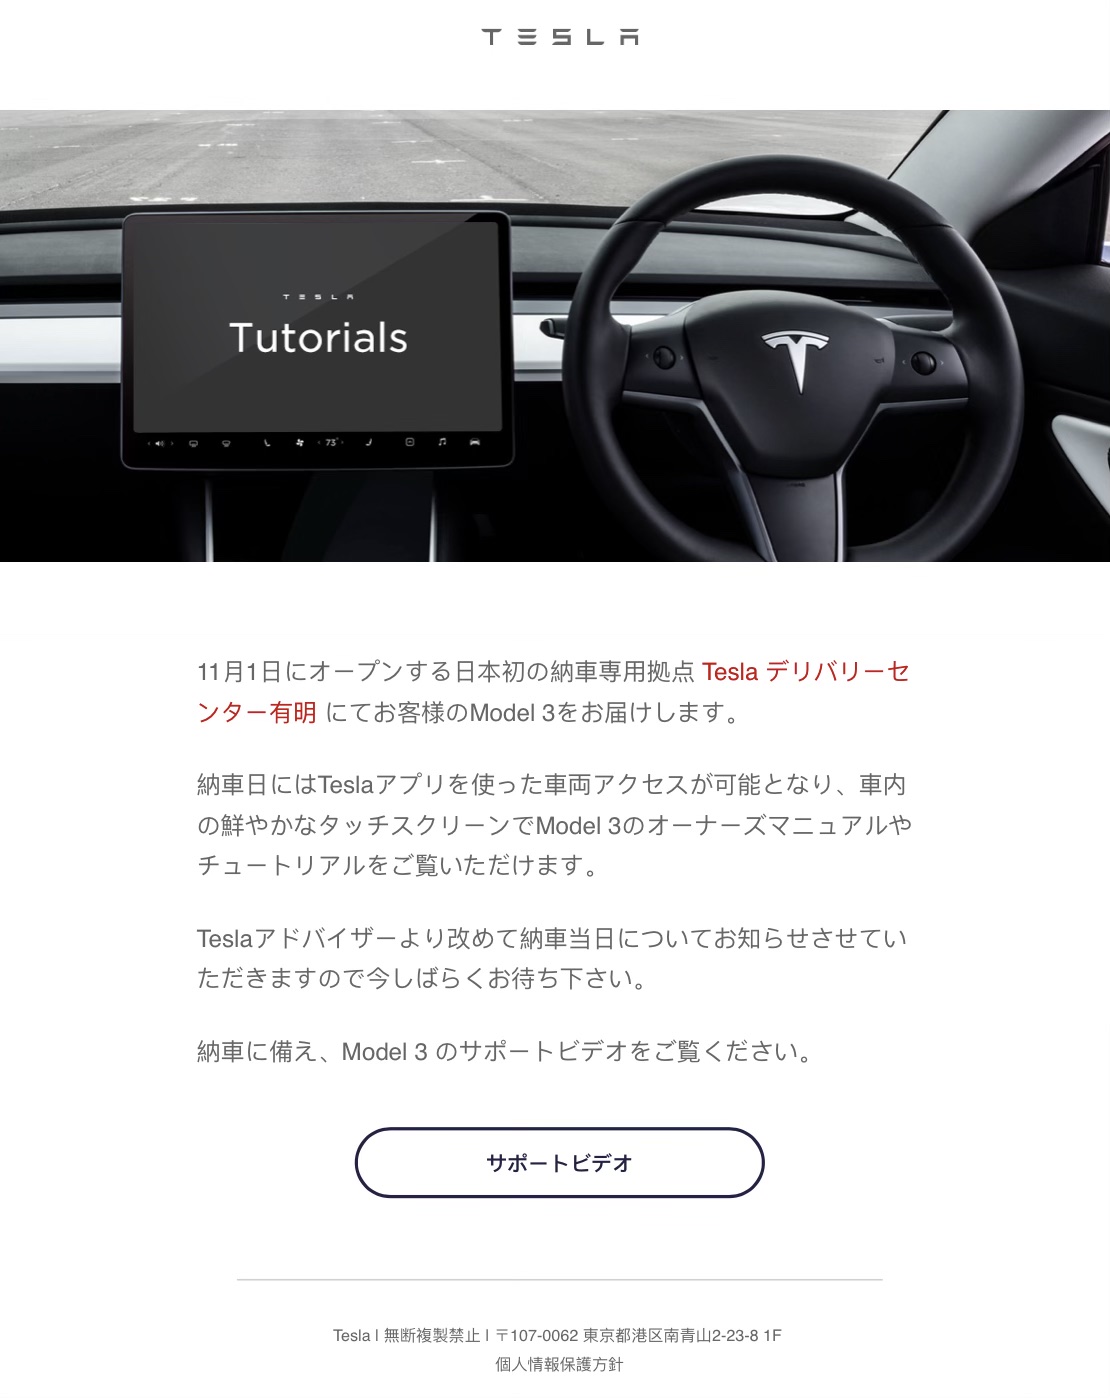 Tesla Japan